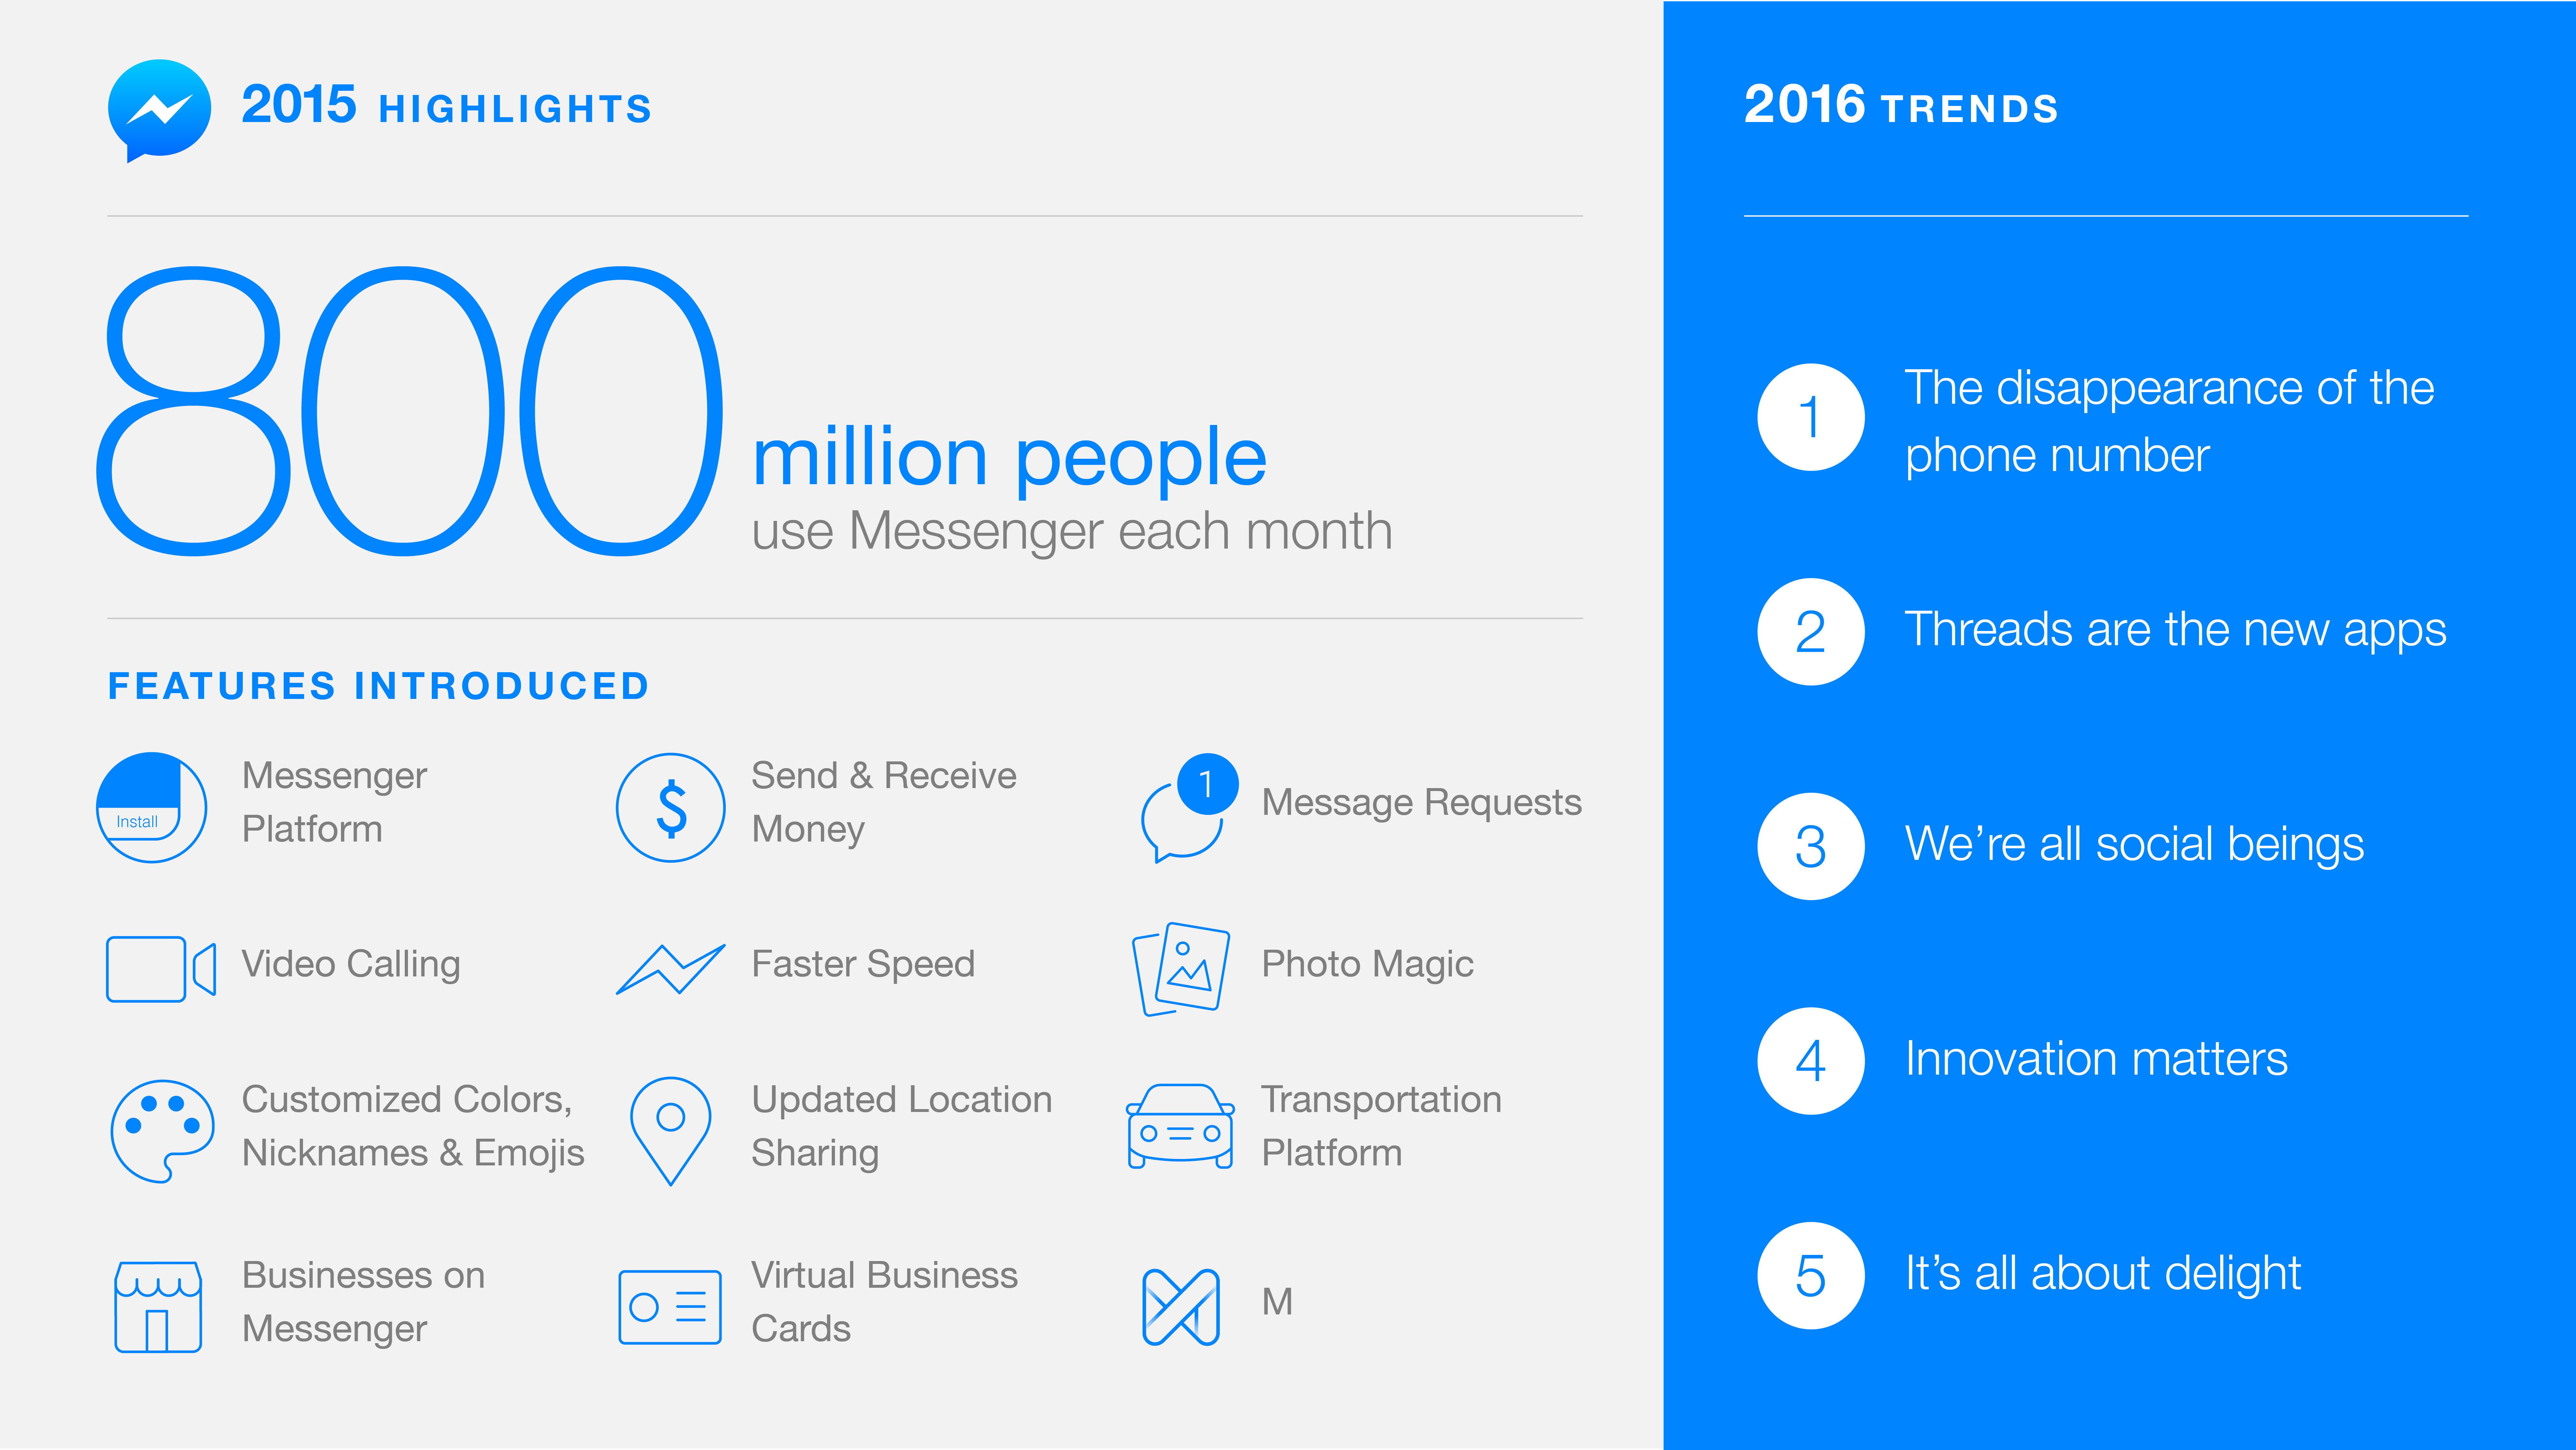 Facebook-Messenger-2016-highlights-infographic-001.png